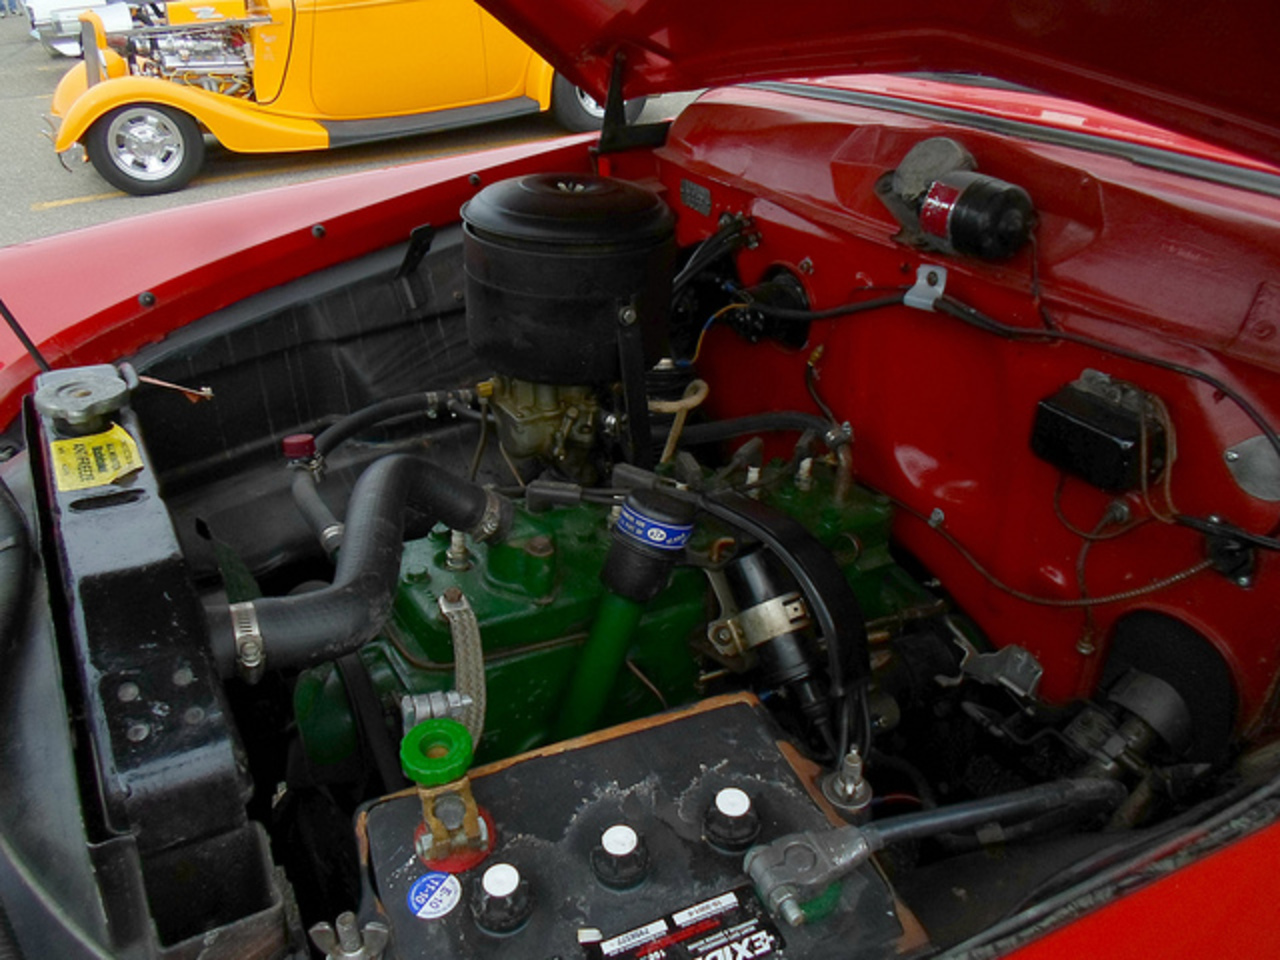 1951 Studebaker Starlight Coupe engine | Flickr - Photo Sharing!